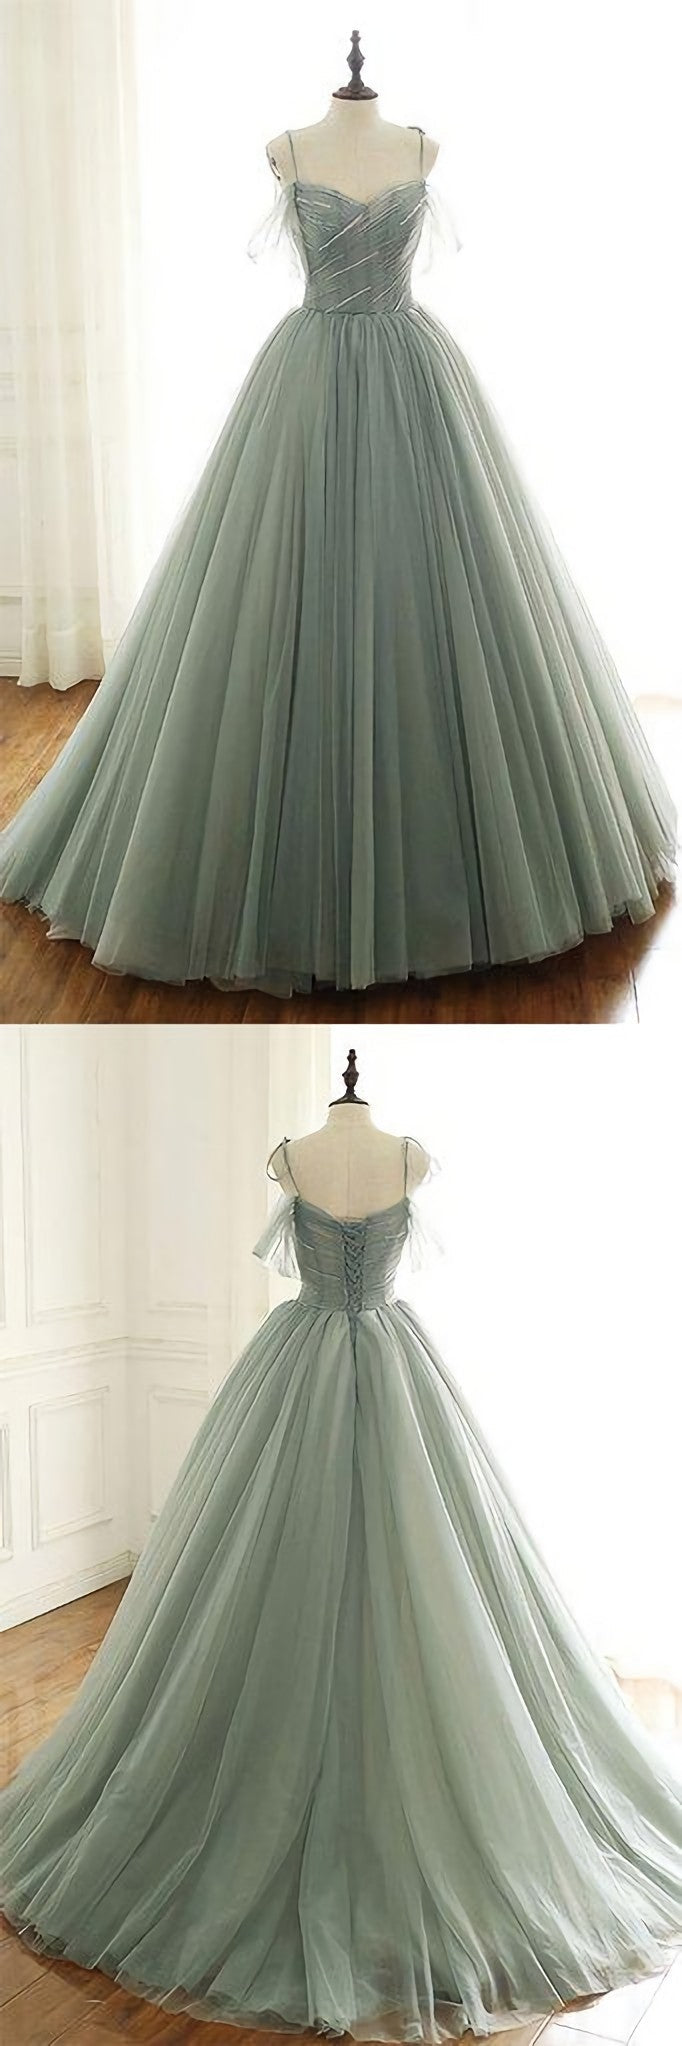 Party Dress Afternoon Tea, Light Green Tulle Long Prom Dress, Green Evening Dress